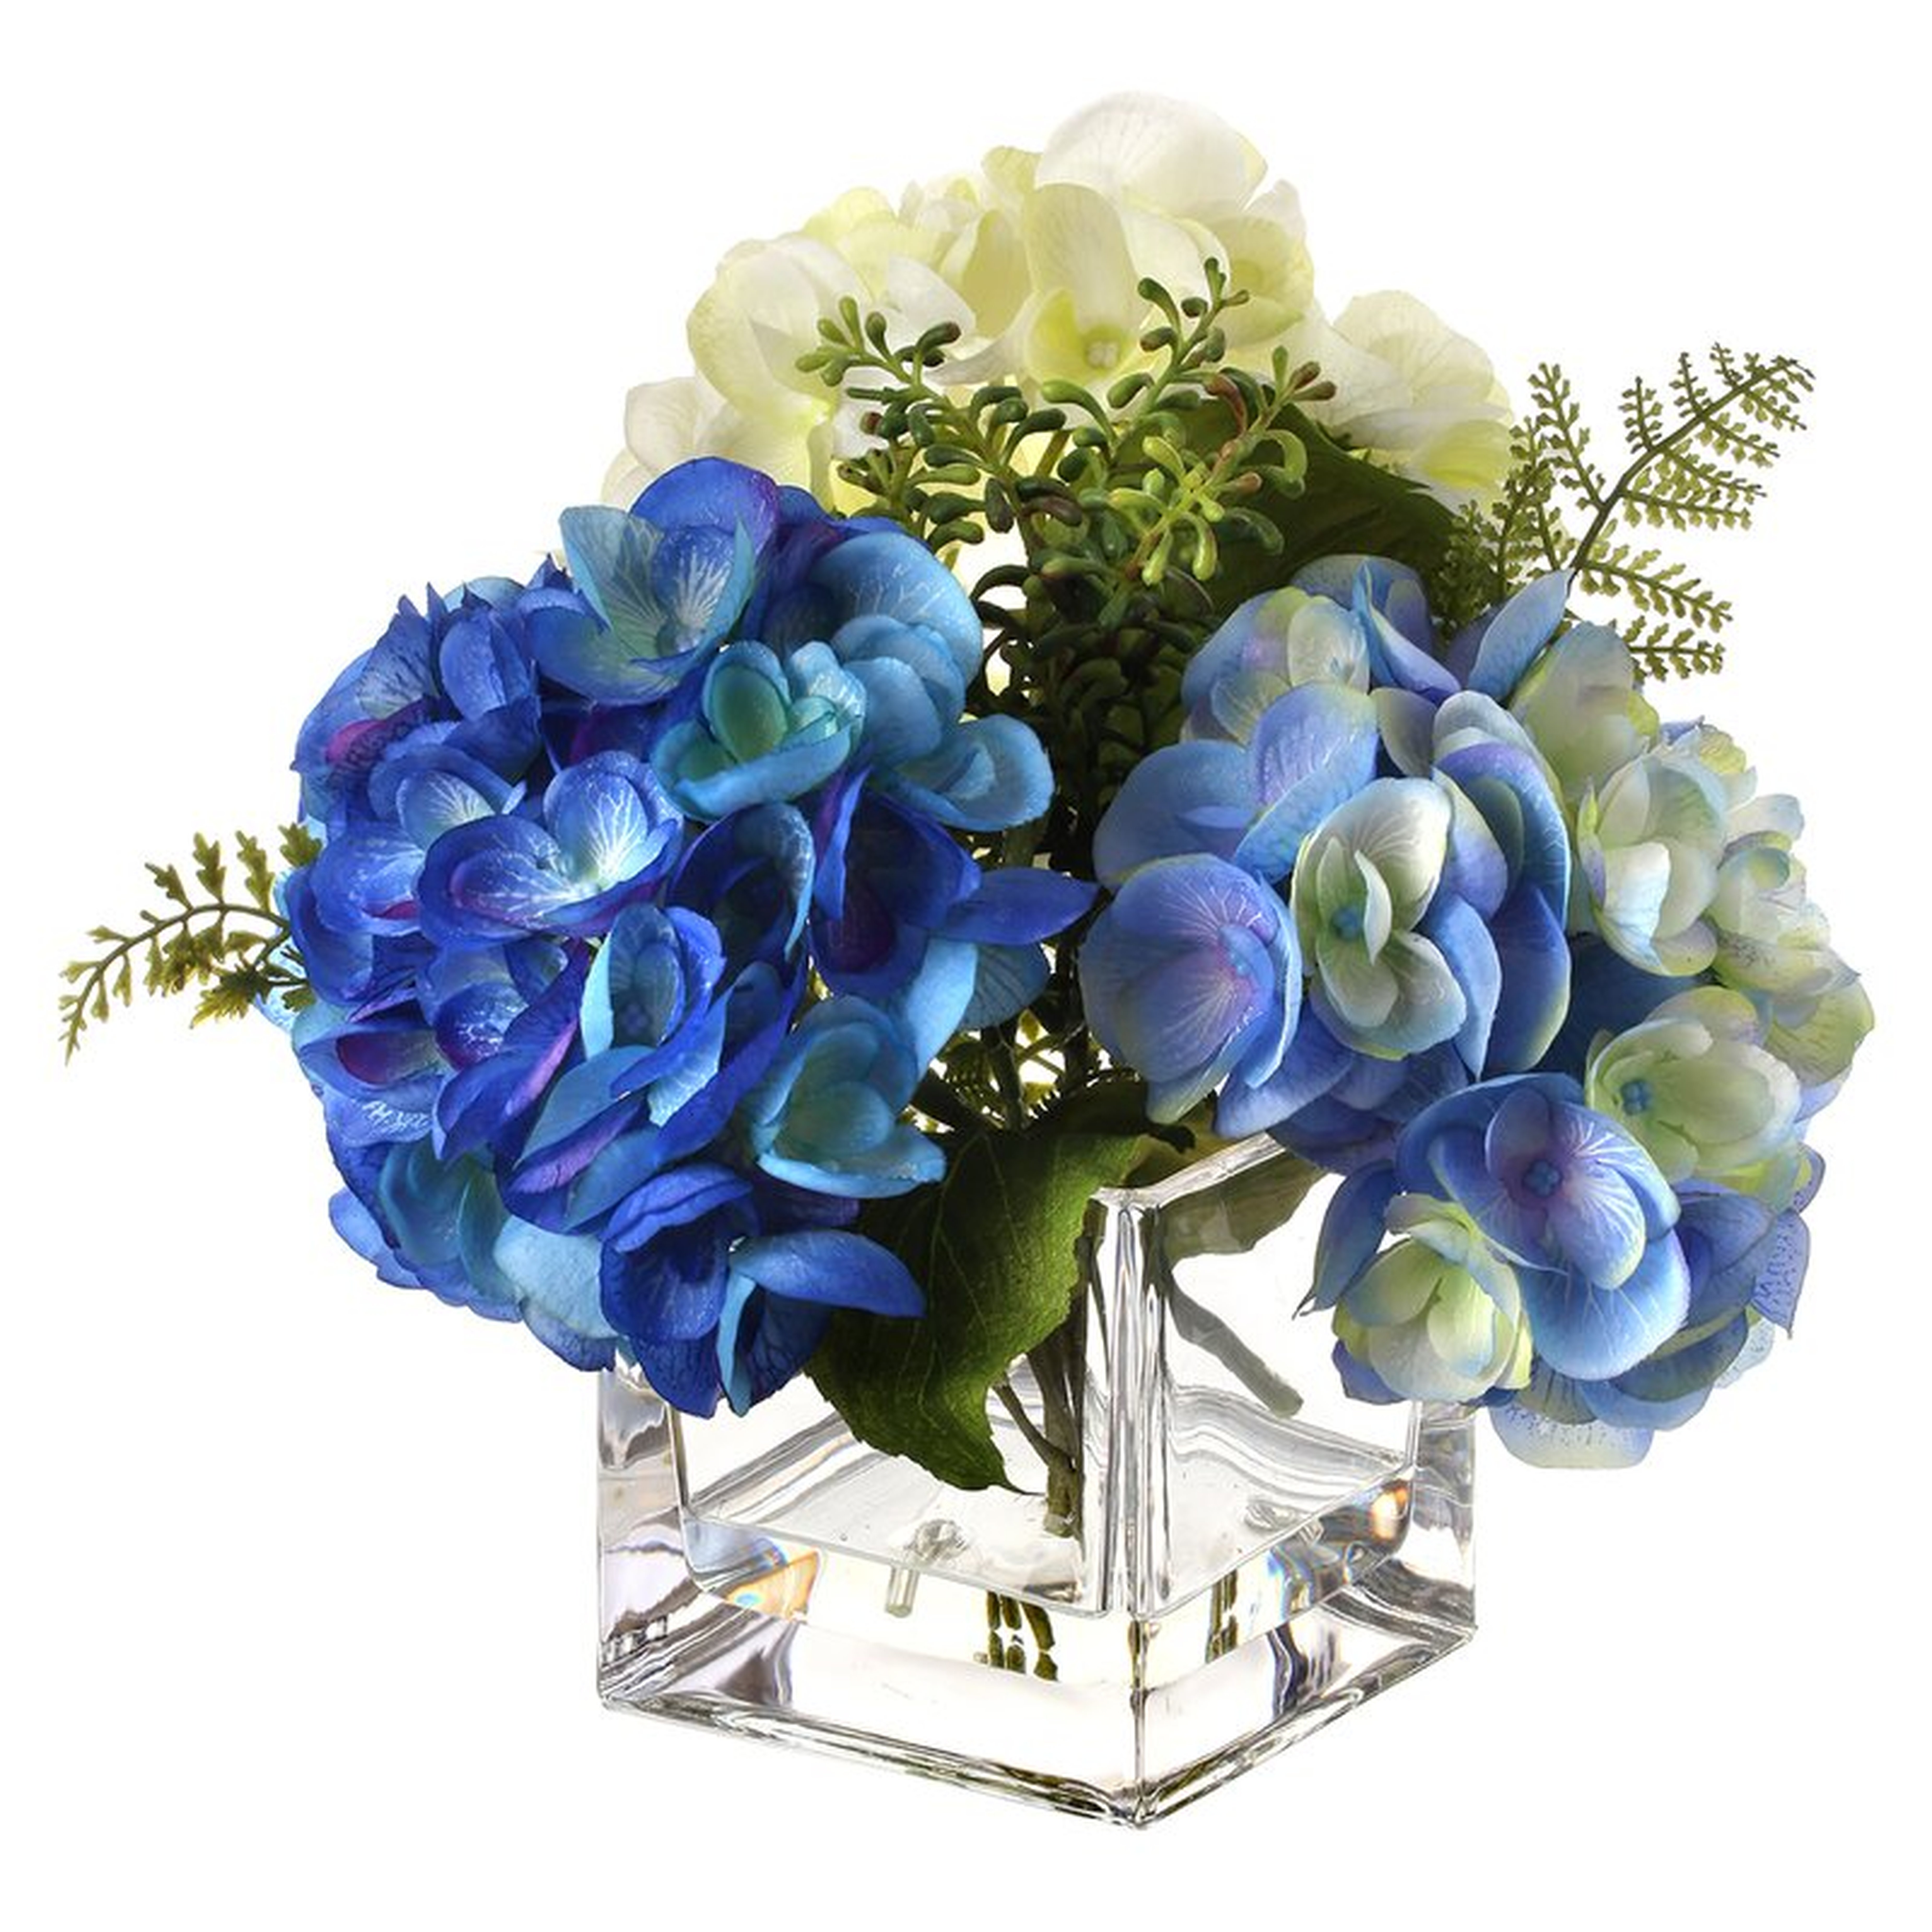 Hydrangea Centerpiece in Vase - Wayfair